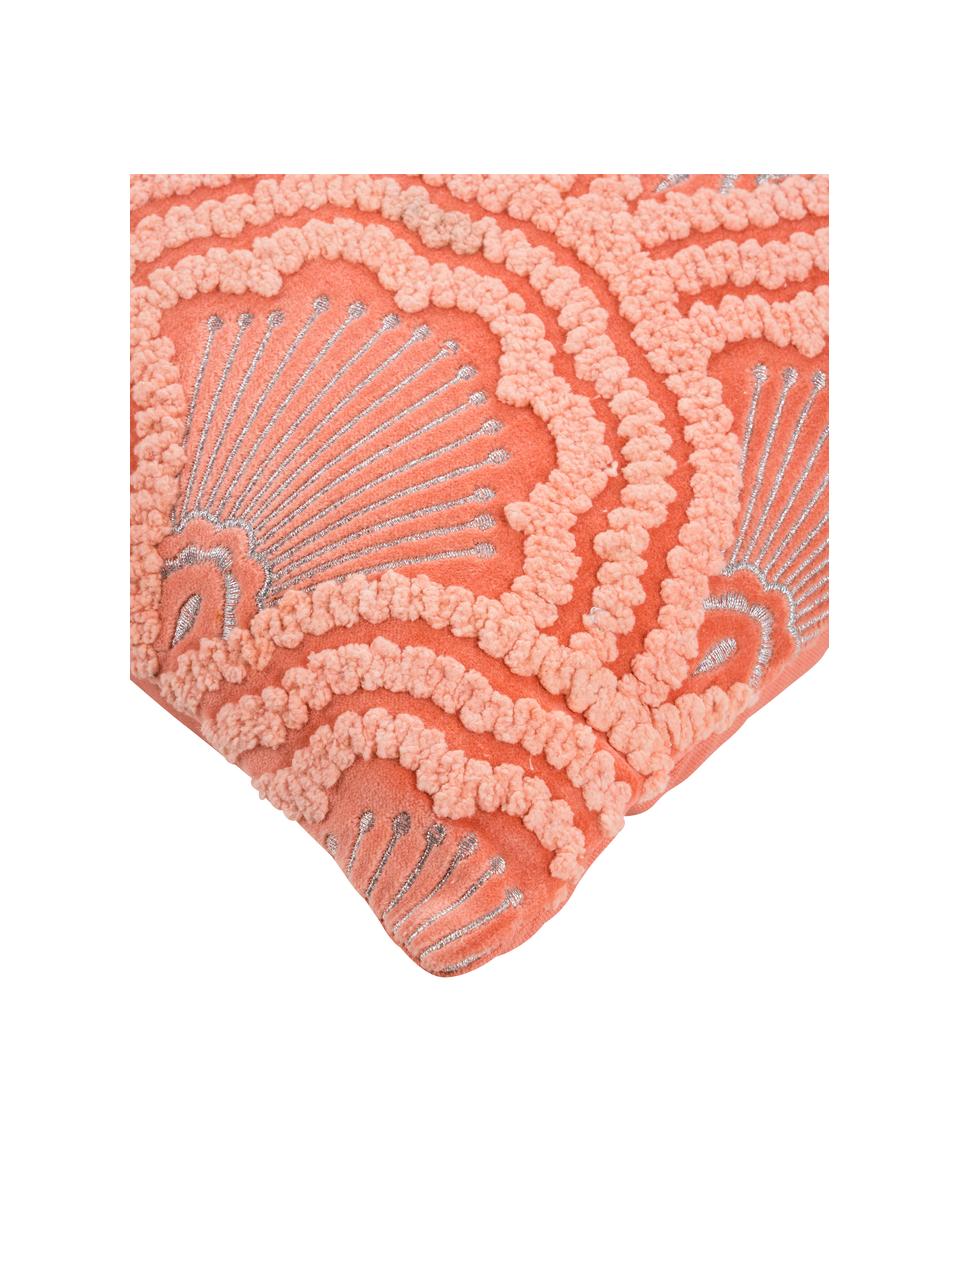 Geborduurde fluwelen kussenhoes Chelsey met hoog-laag patroon, 100% katoenfluweel, Koraalrood, 45 x 45 cm